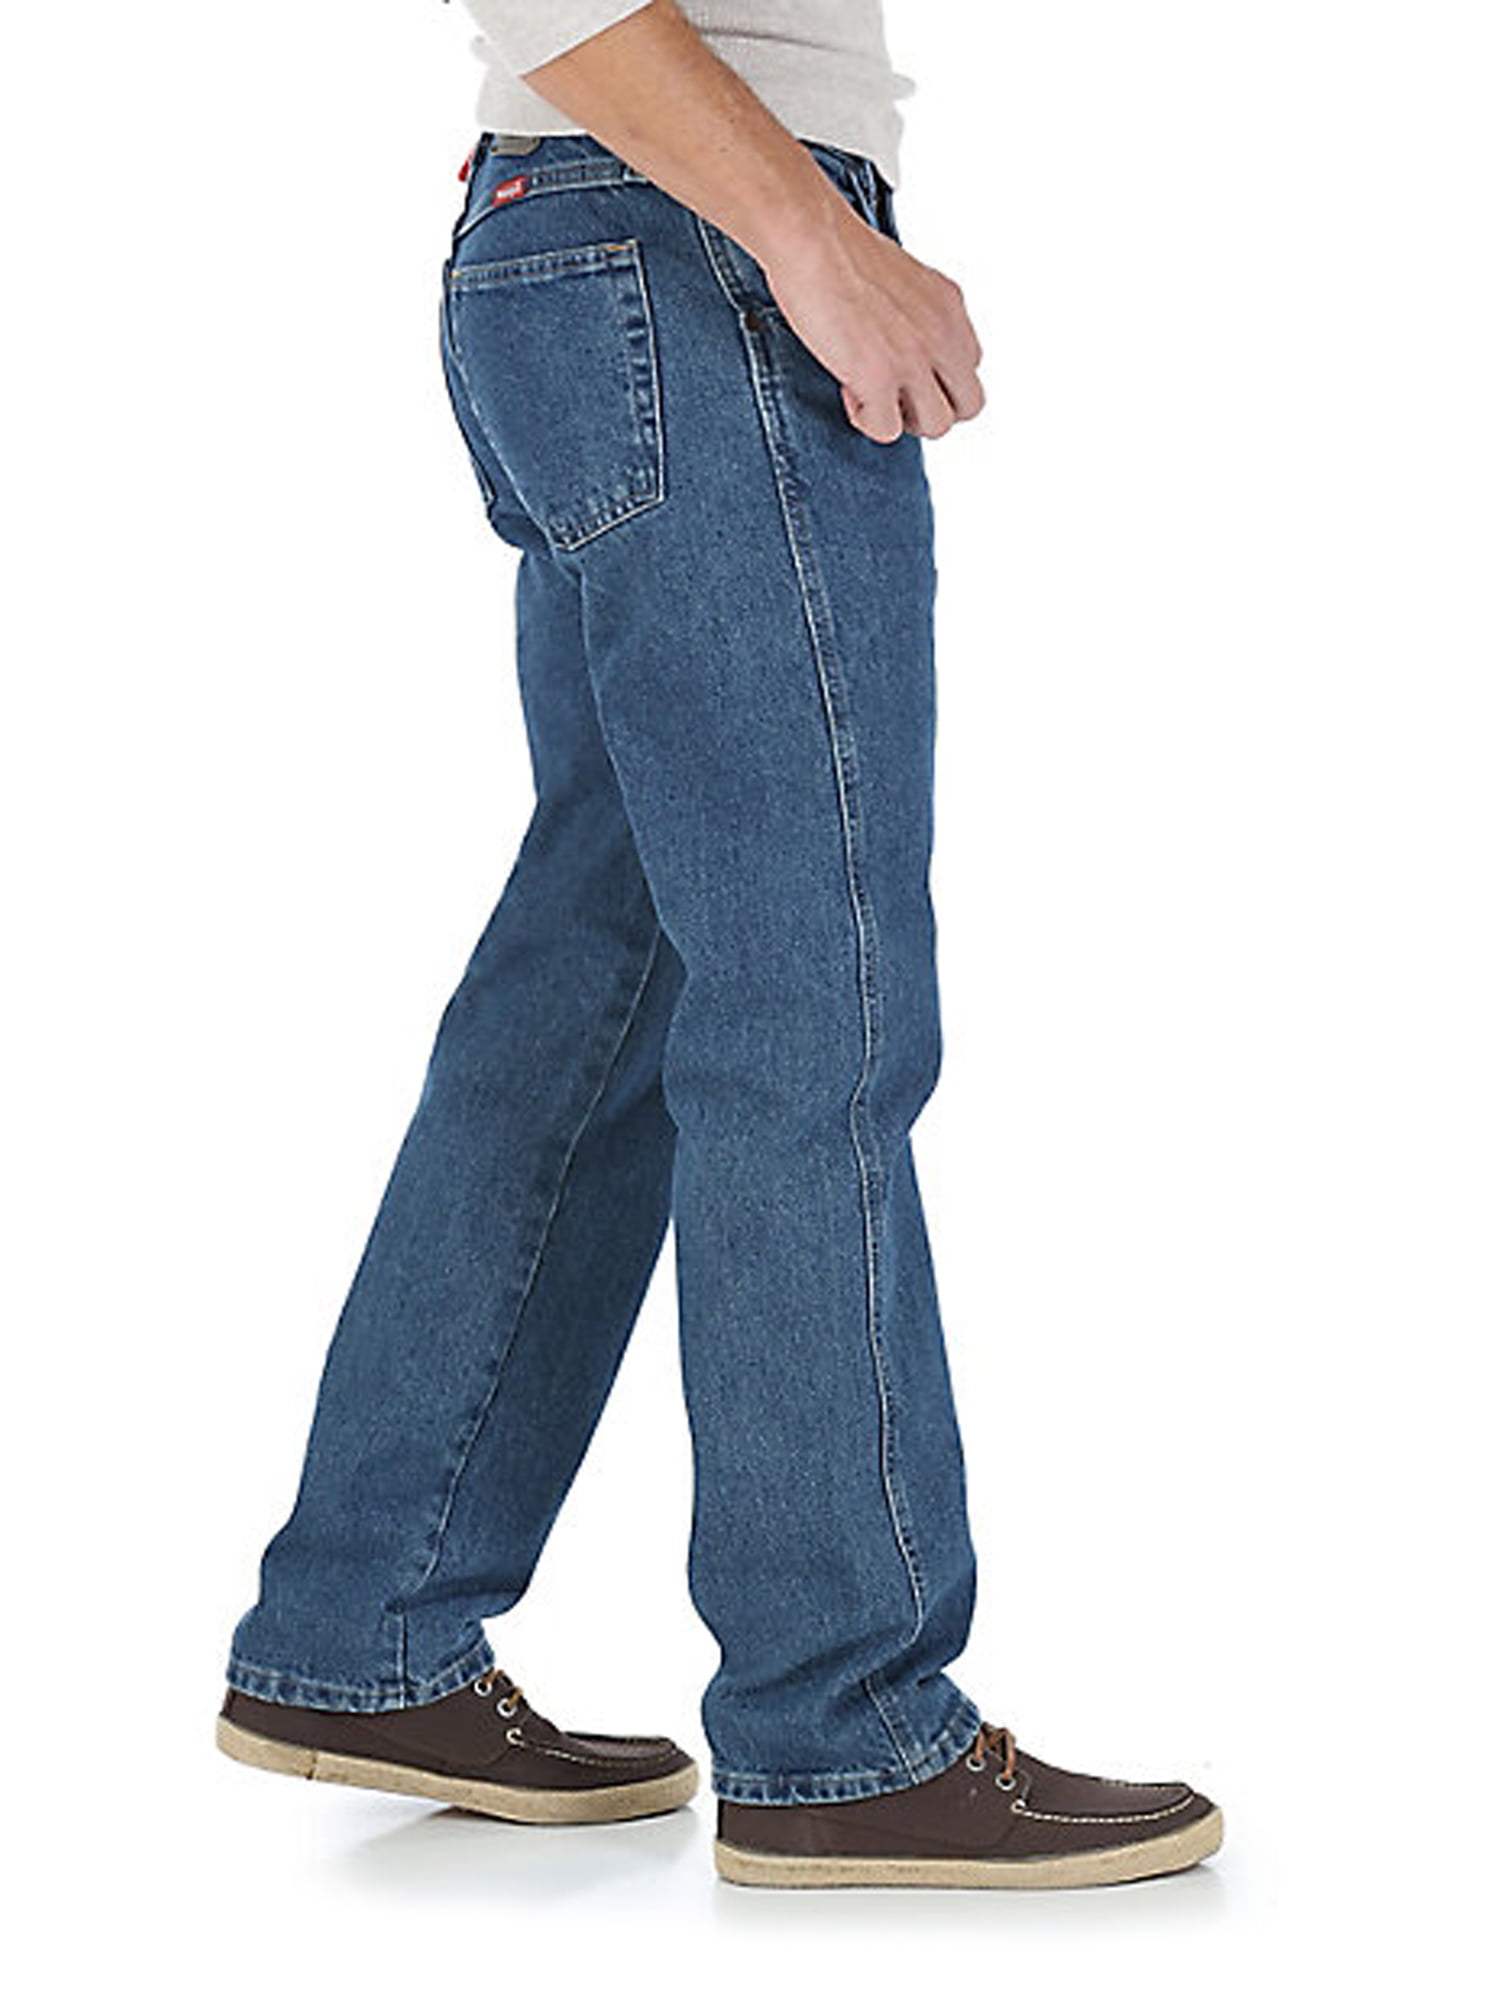 New Wrangler Five Star Regular Fit Jeans Men's Sizes Five Colors 100%  Cotton | eBay